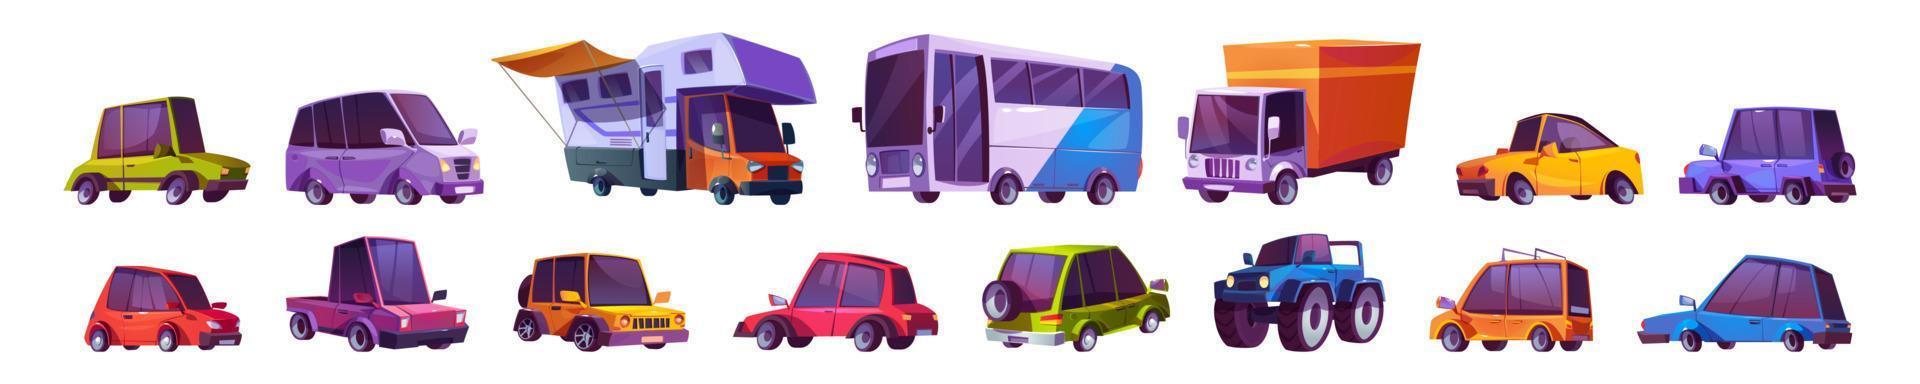 tekenfilm auto's, auto's reeks bus, monster vrachtauto vector